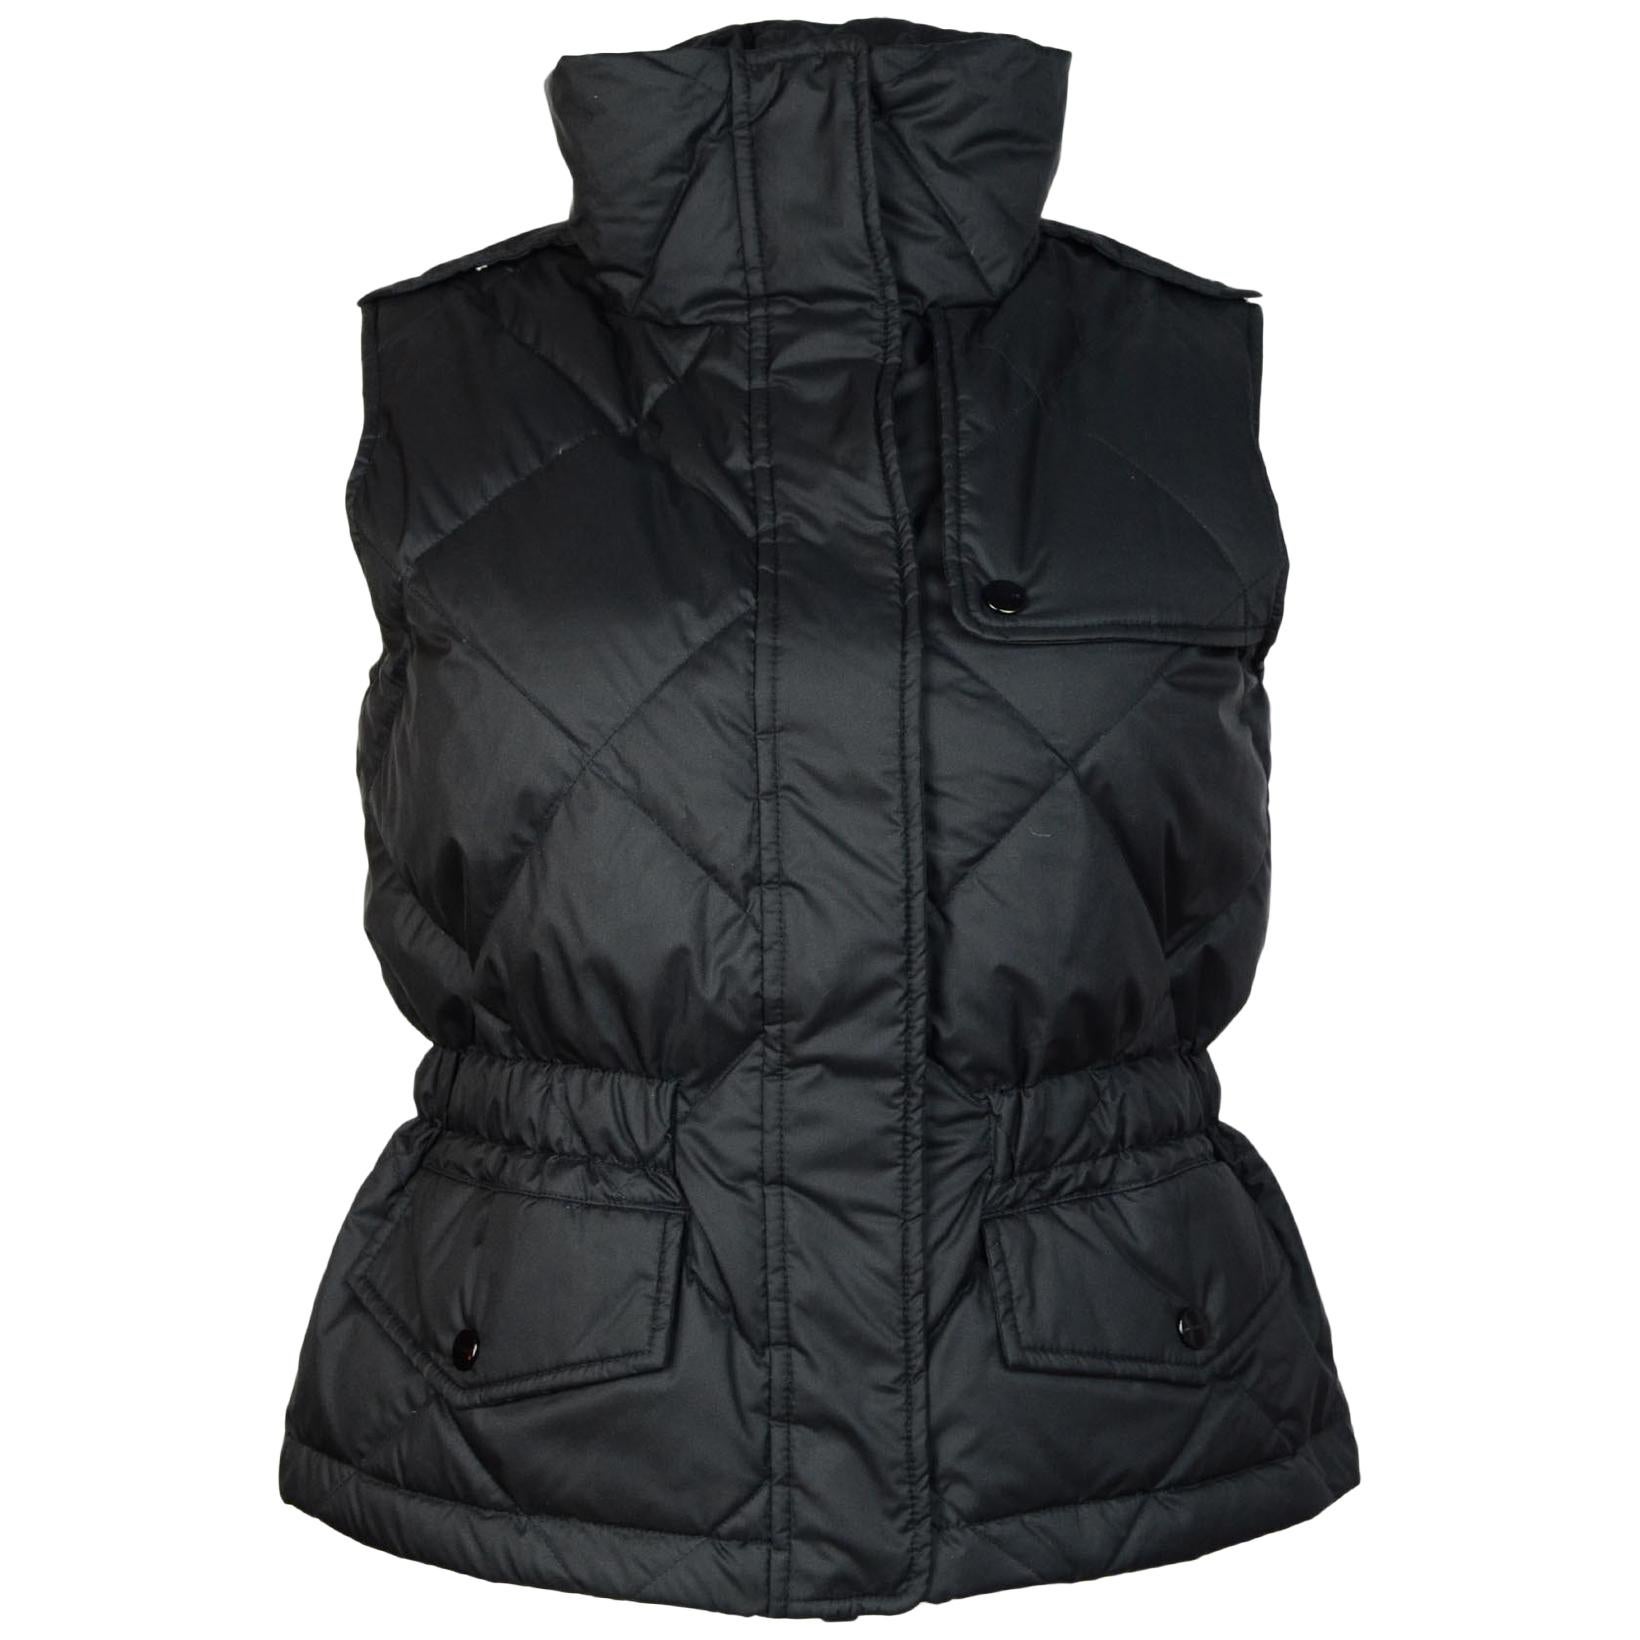 Burberry Black Quilted Zip Up Vest W/ Grey/White/Black Tartan Lining Sz S